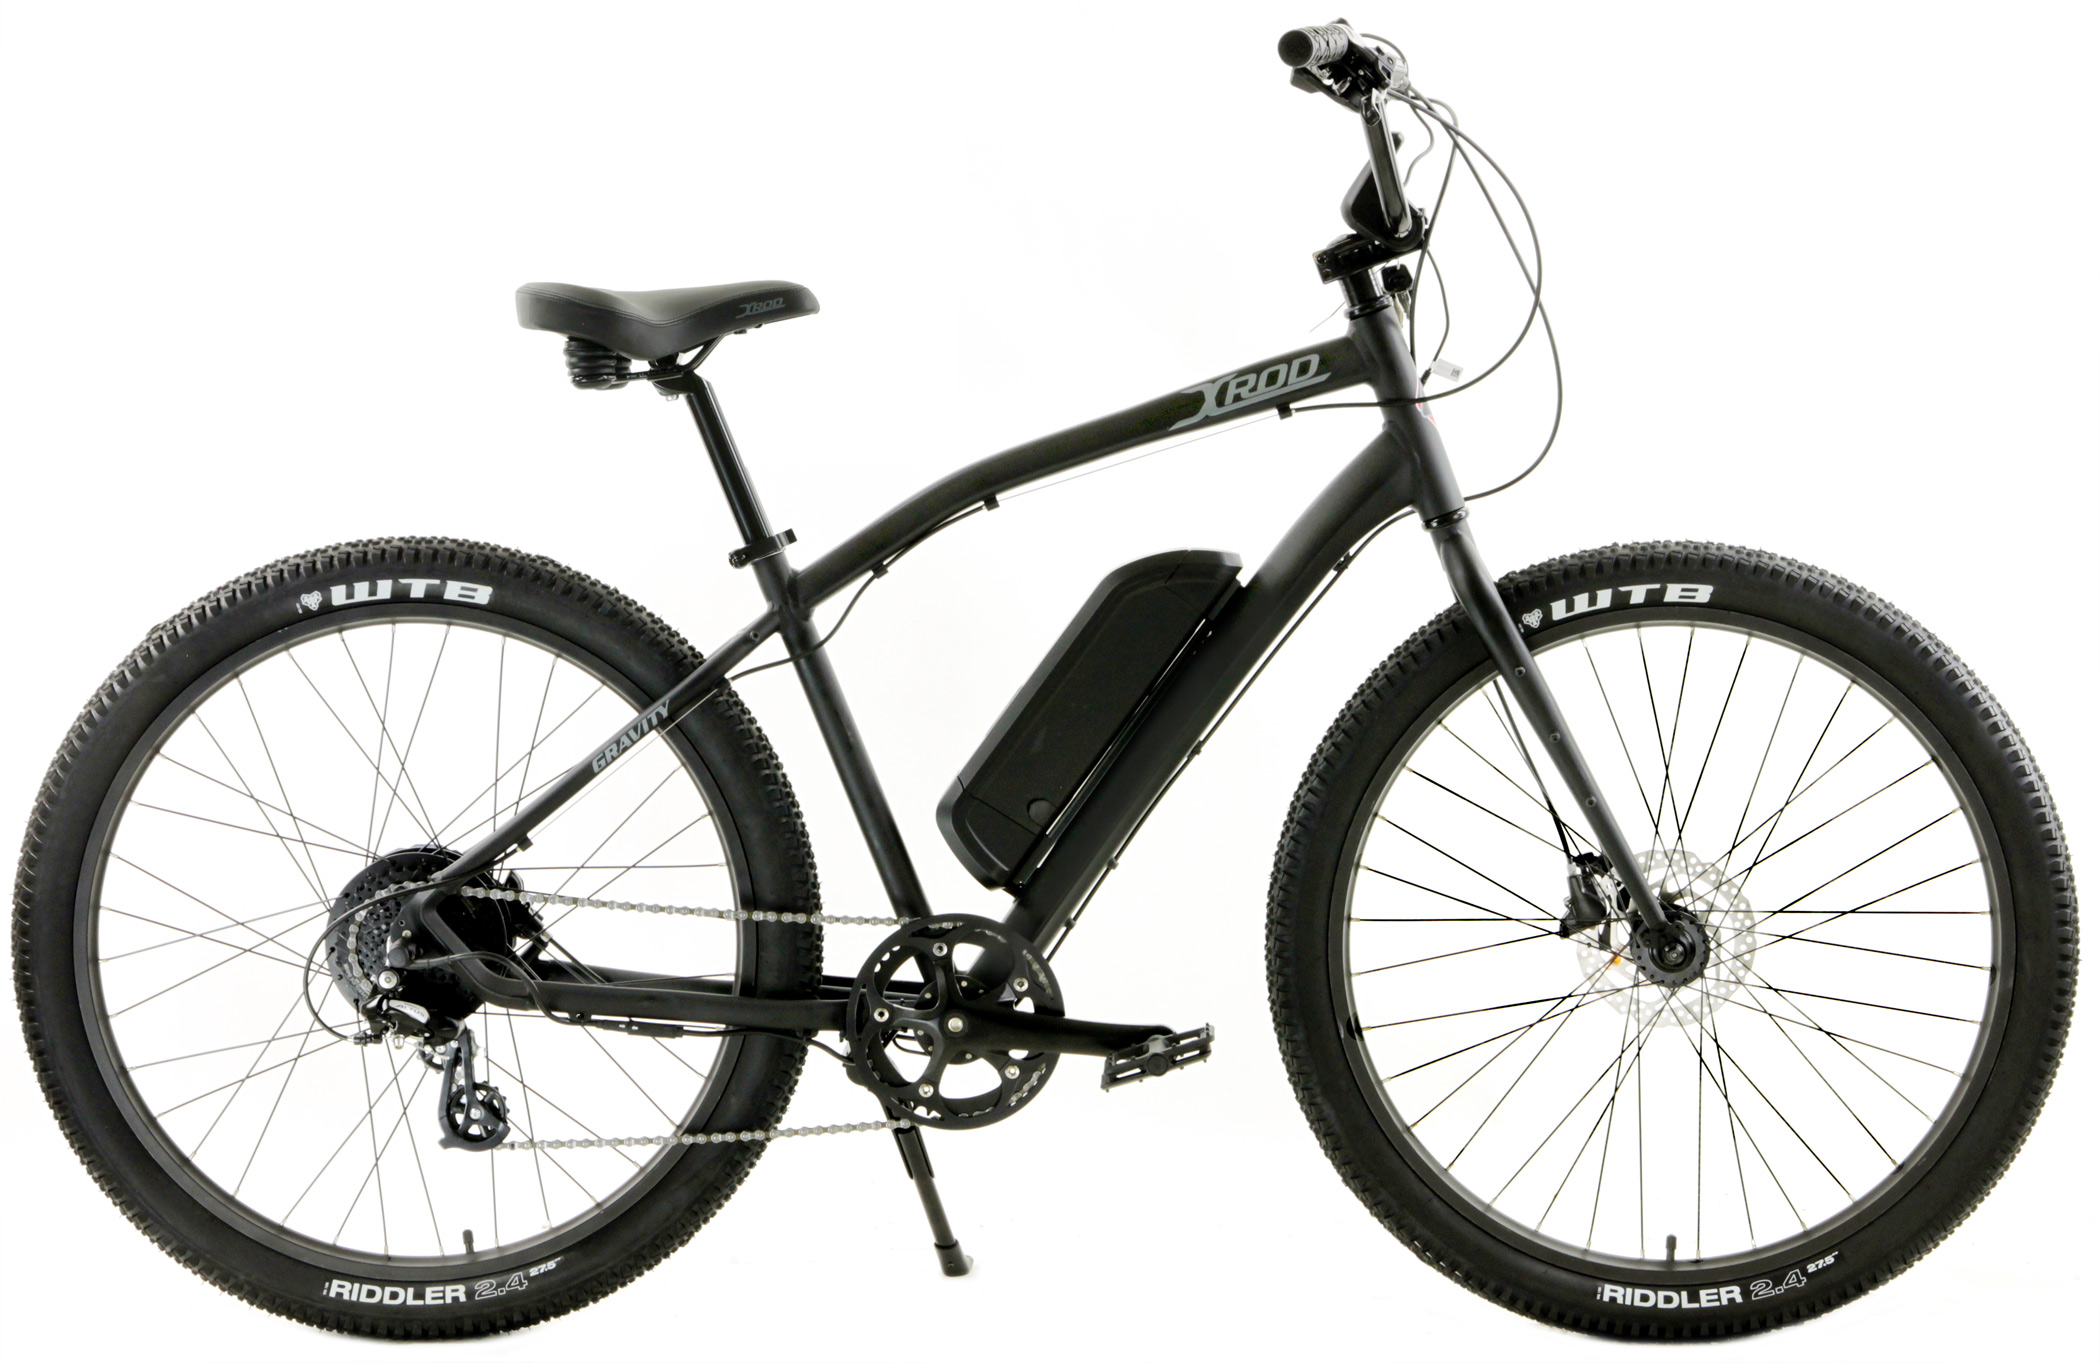  Gravity X-ROD E Electric Bike Shimano Equipped Hybrid Bike Image